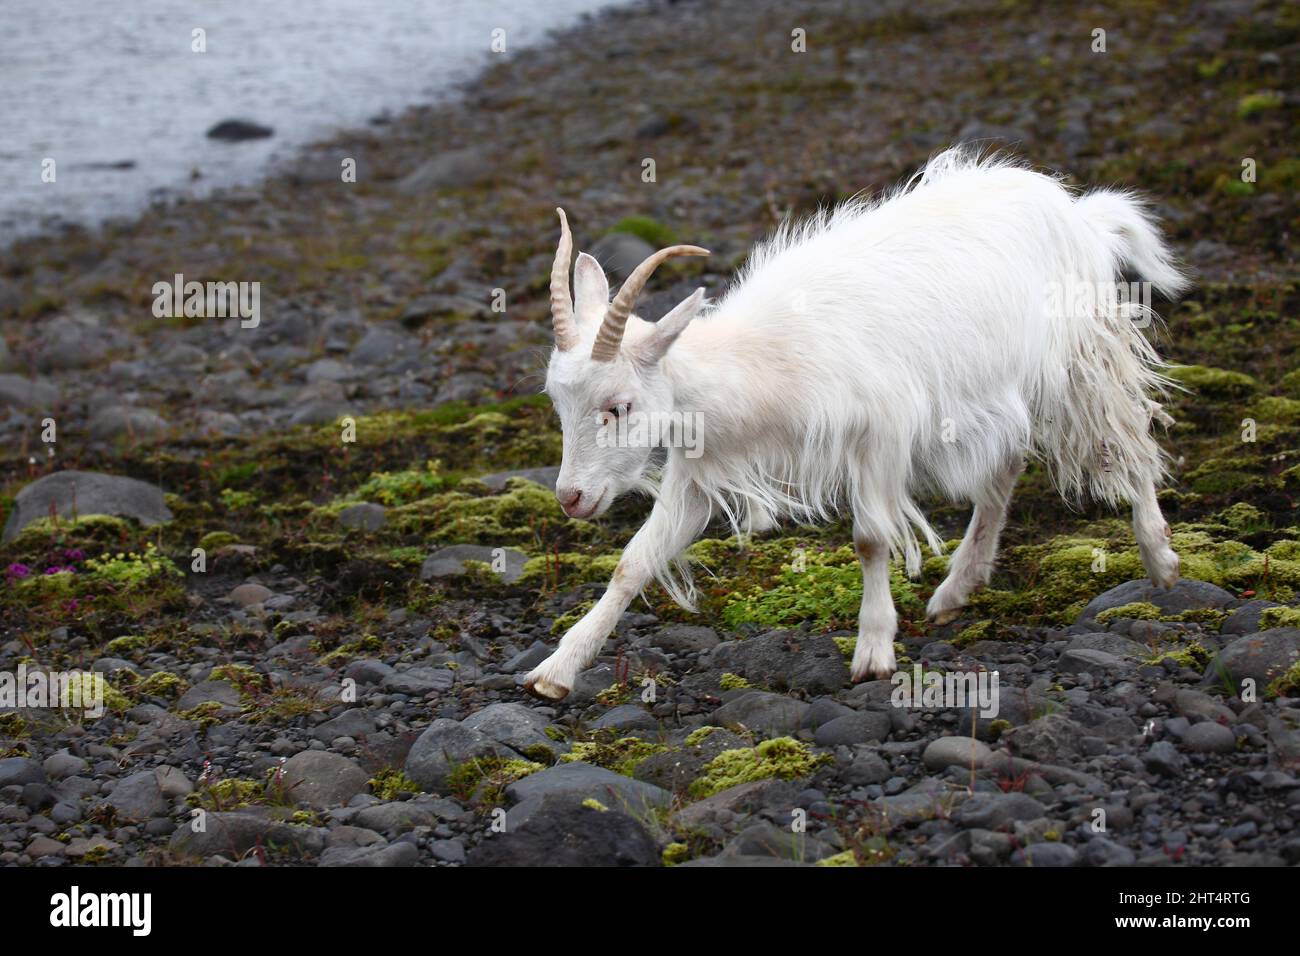 Islandziege / Icelandic goat / Capra hircus Stock Photo